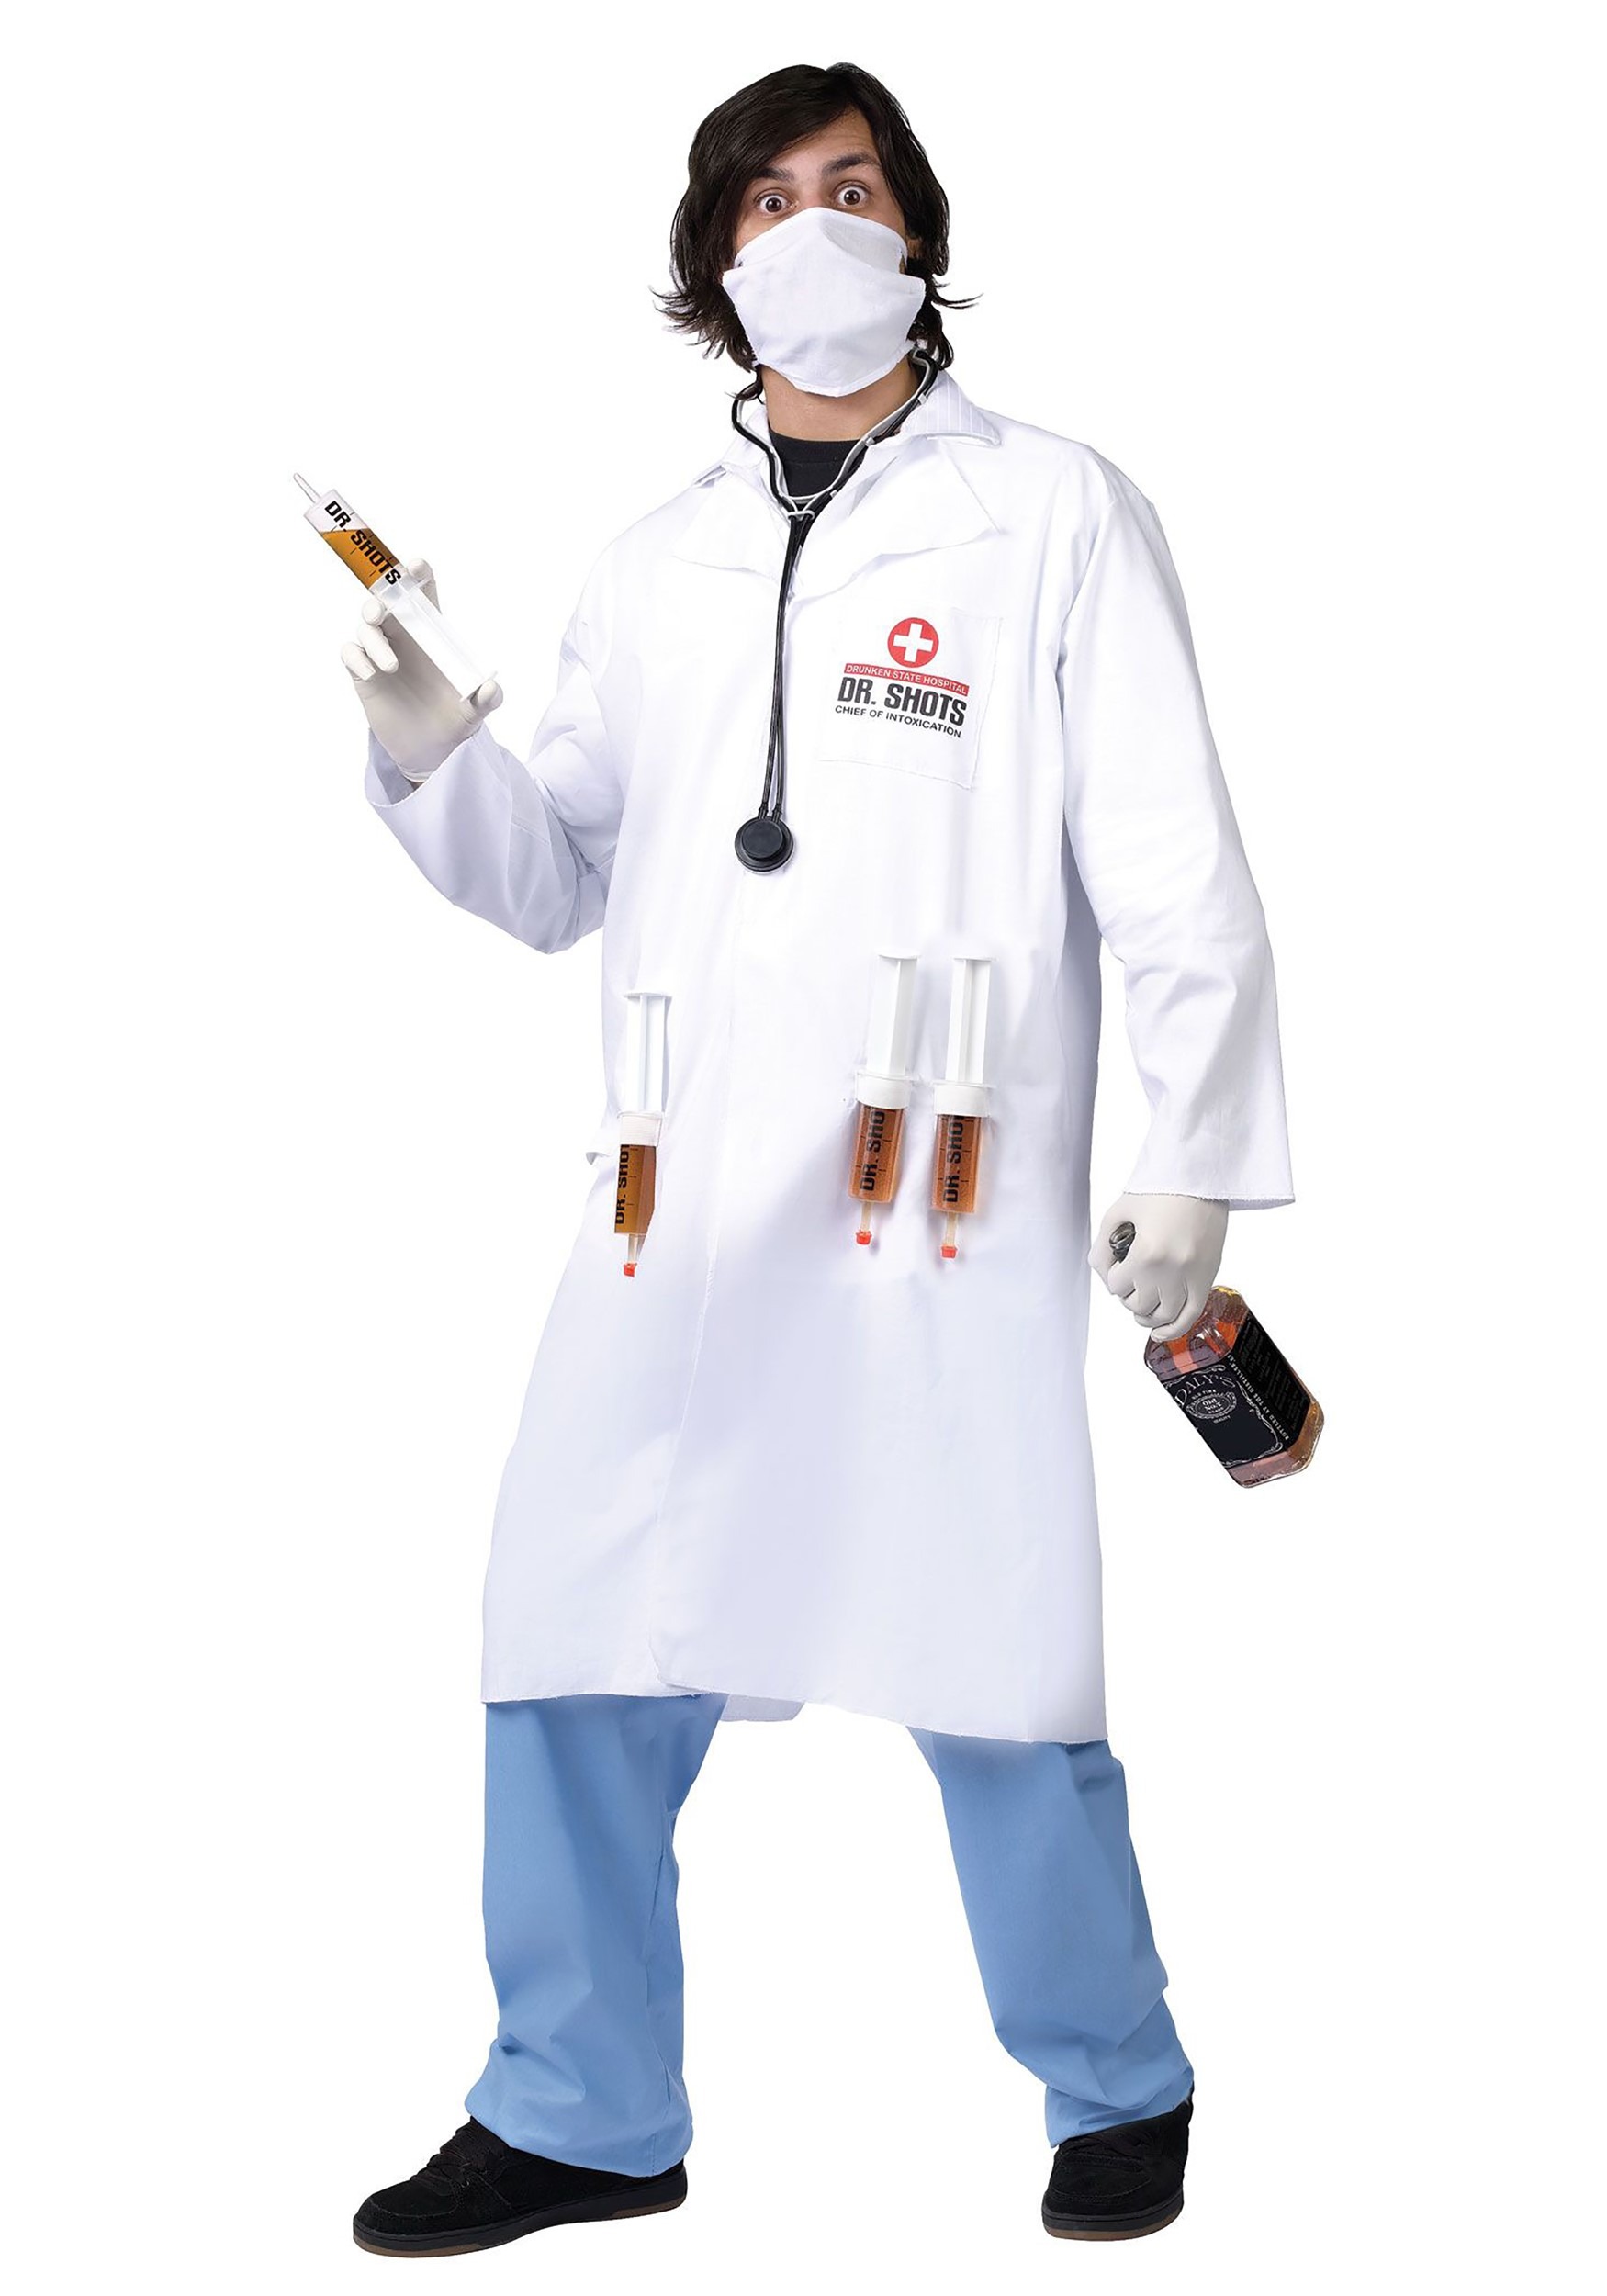 Adult Dr. Shots Costume